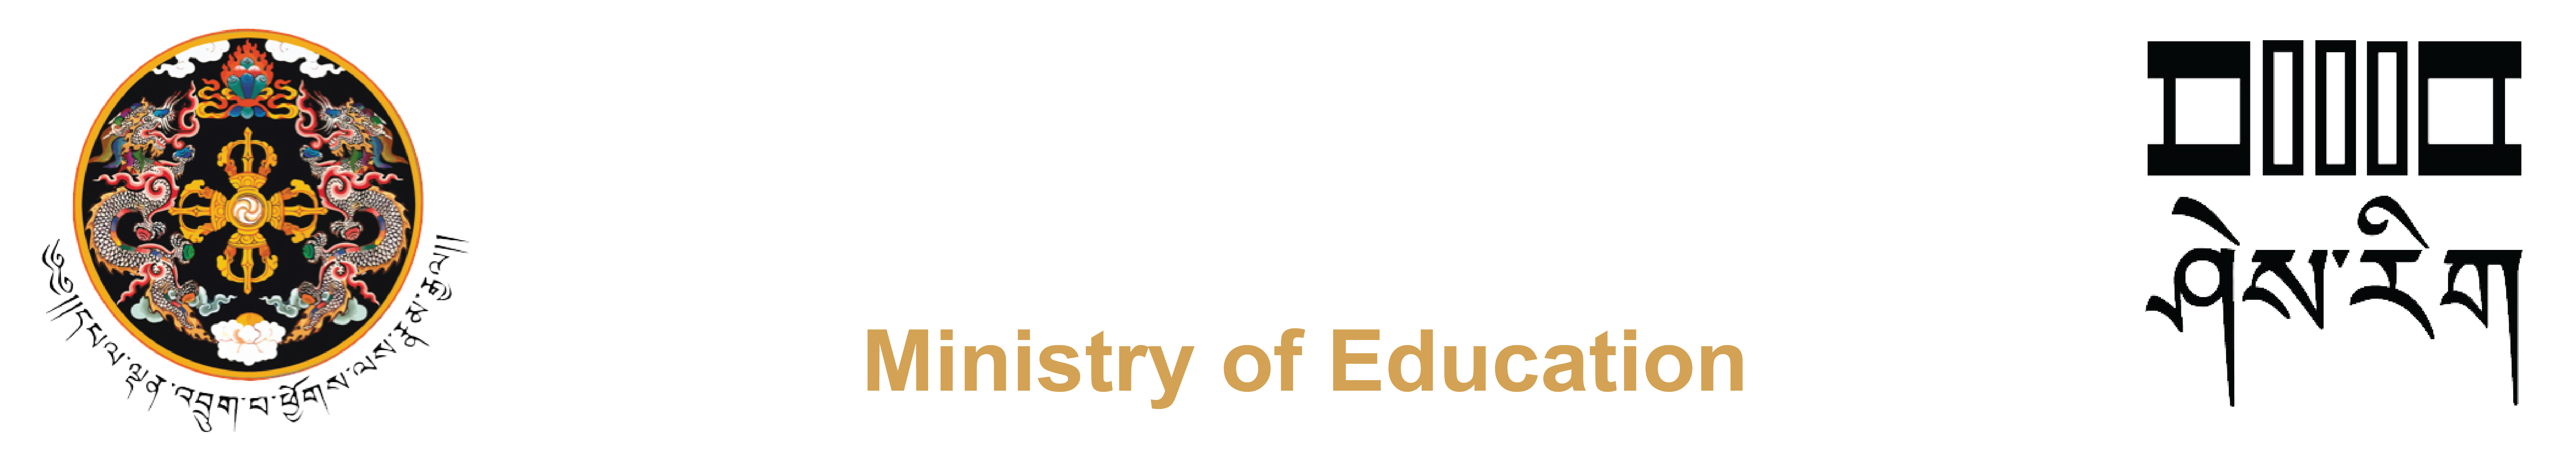 Department of School Education